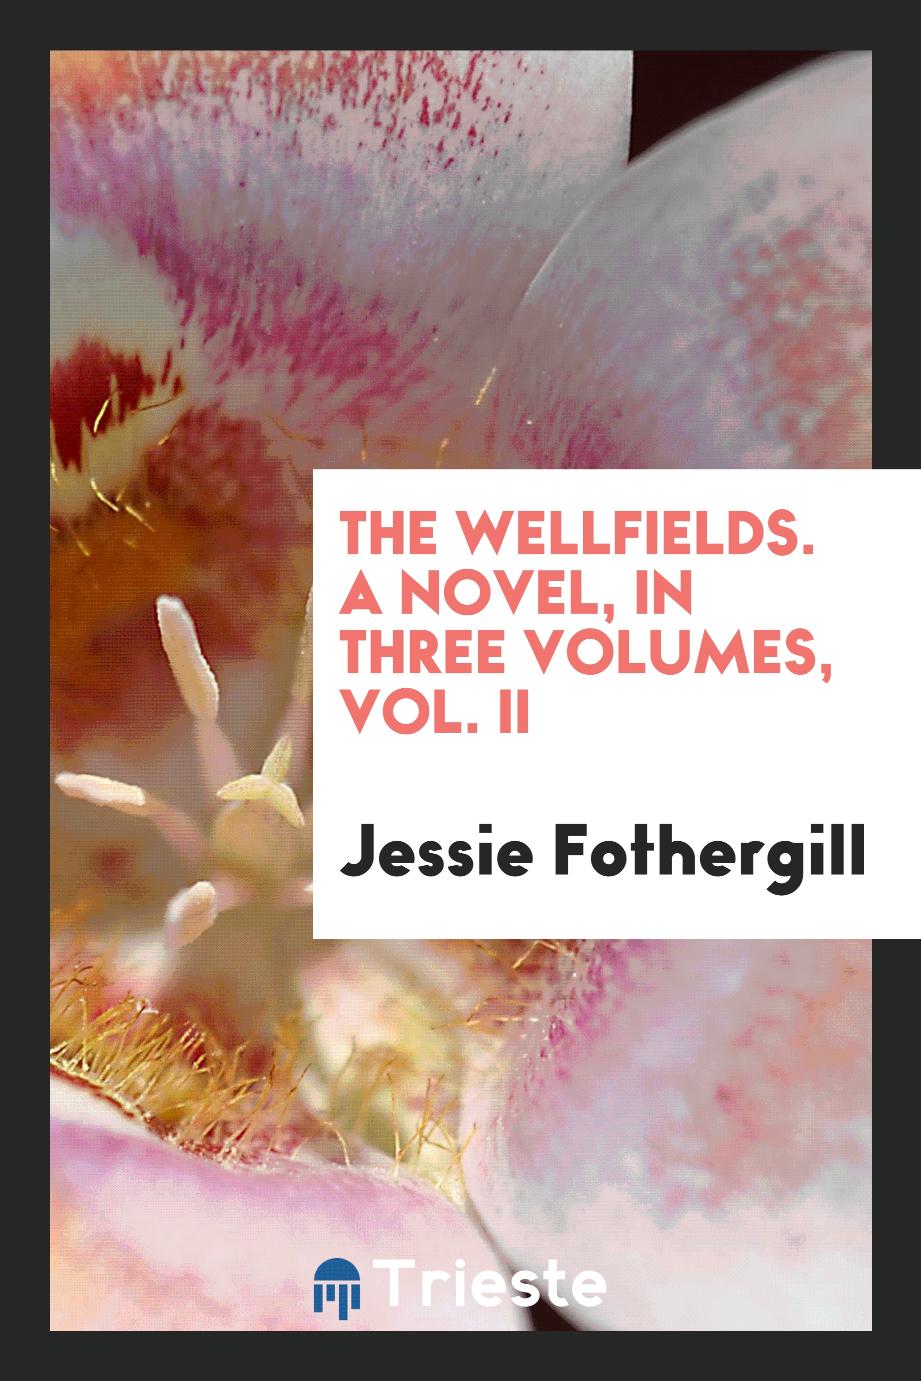 The wellfields. A novel, in three volumes, Vol. II